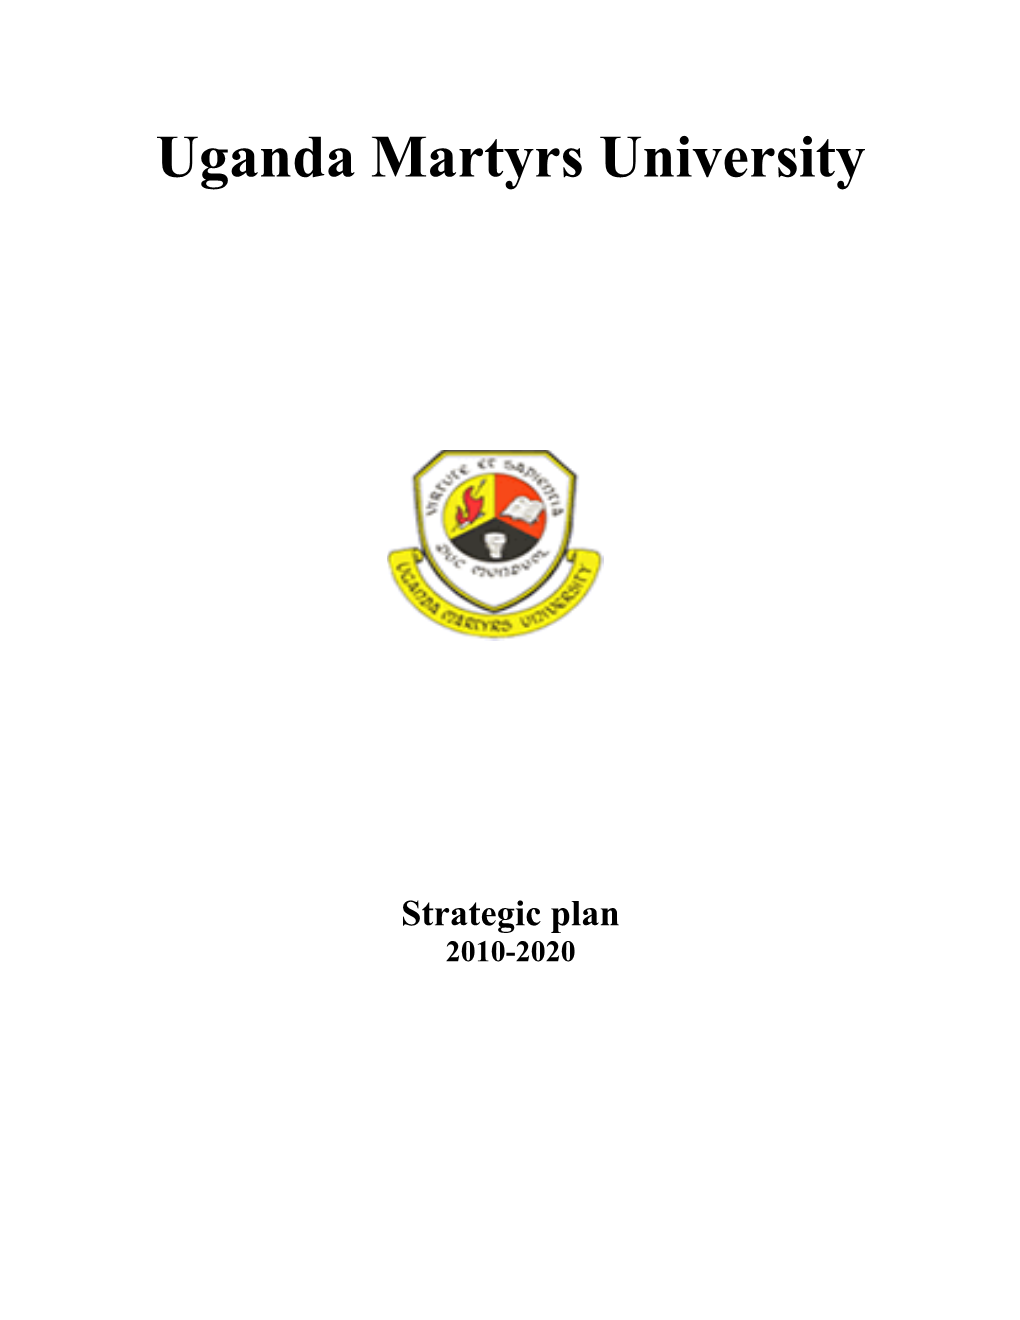 UMU Strategic Plan 2010-2020